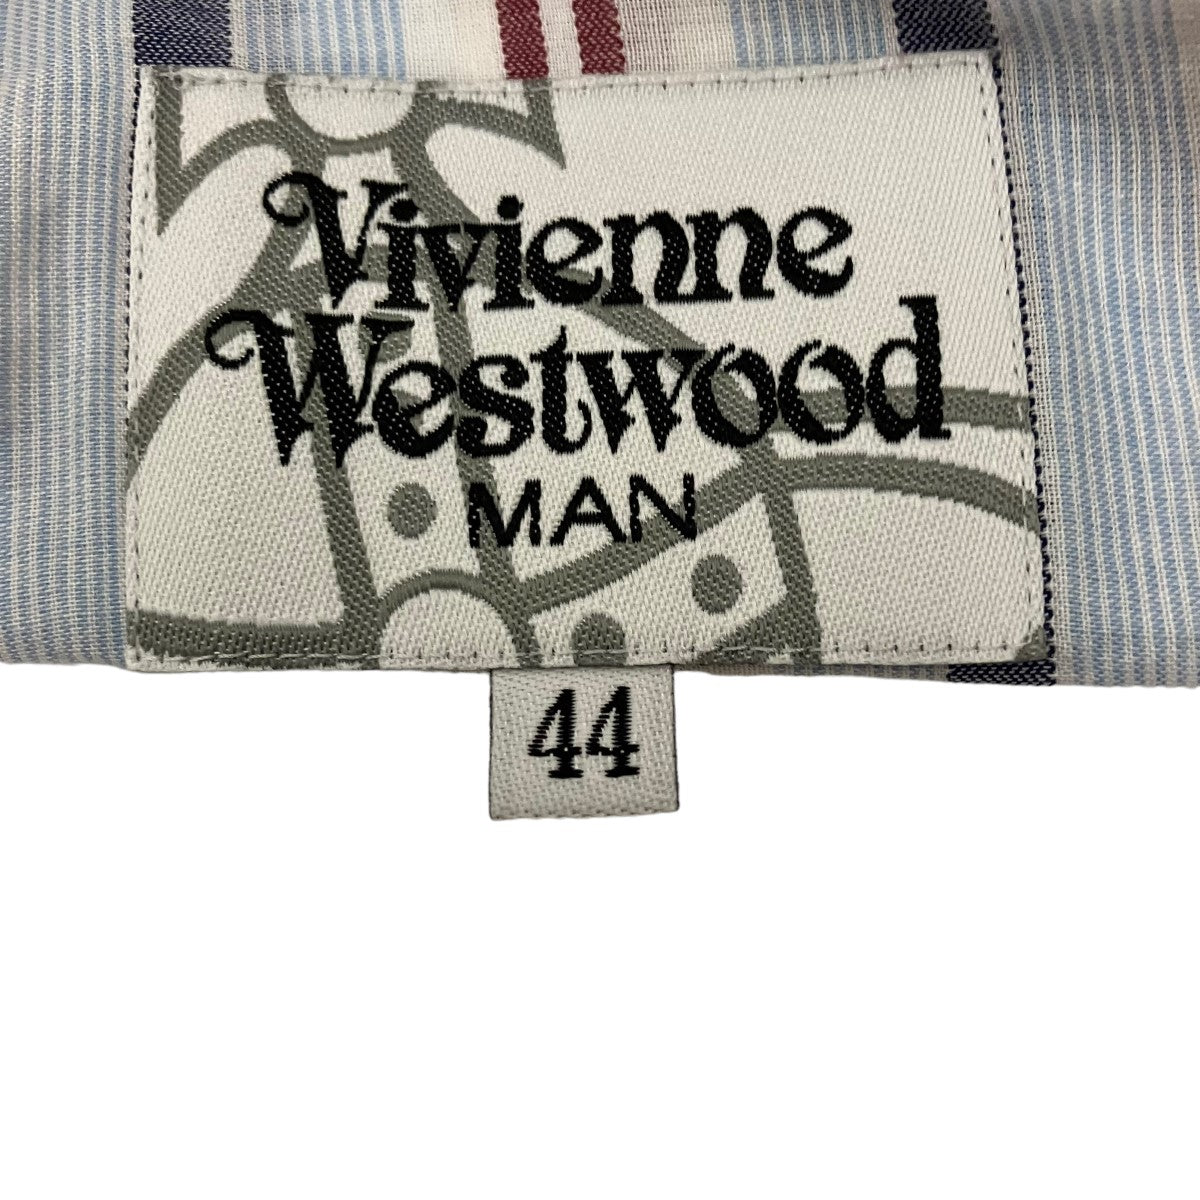 Vivienne Westwood man(ヴィヴィアンウエストウッドマン) シンストライプムーブメントシャツVW-WR-89556  VW-WR-89556 ブルー サイズ S｜【公式】カインドオルオンライン ブランド古着・中古通販【kindal】